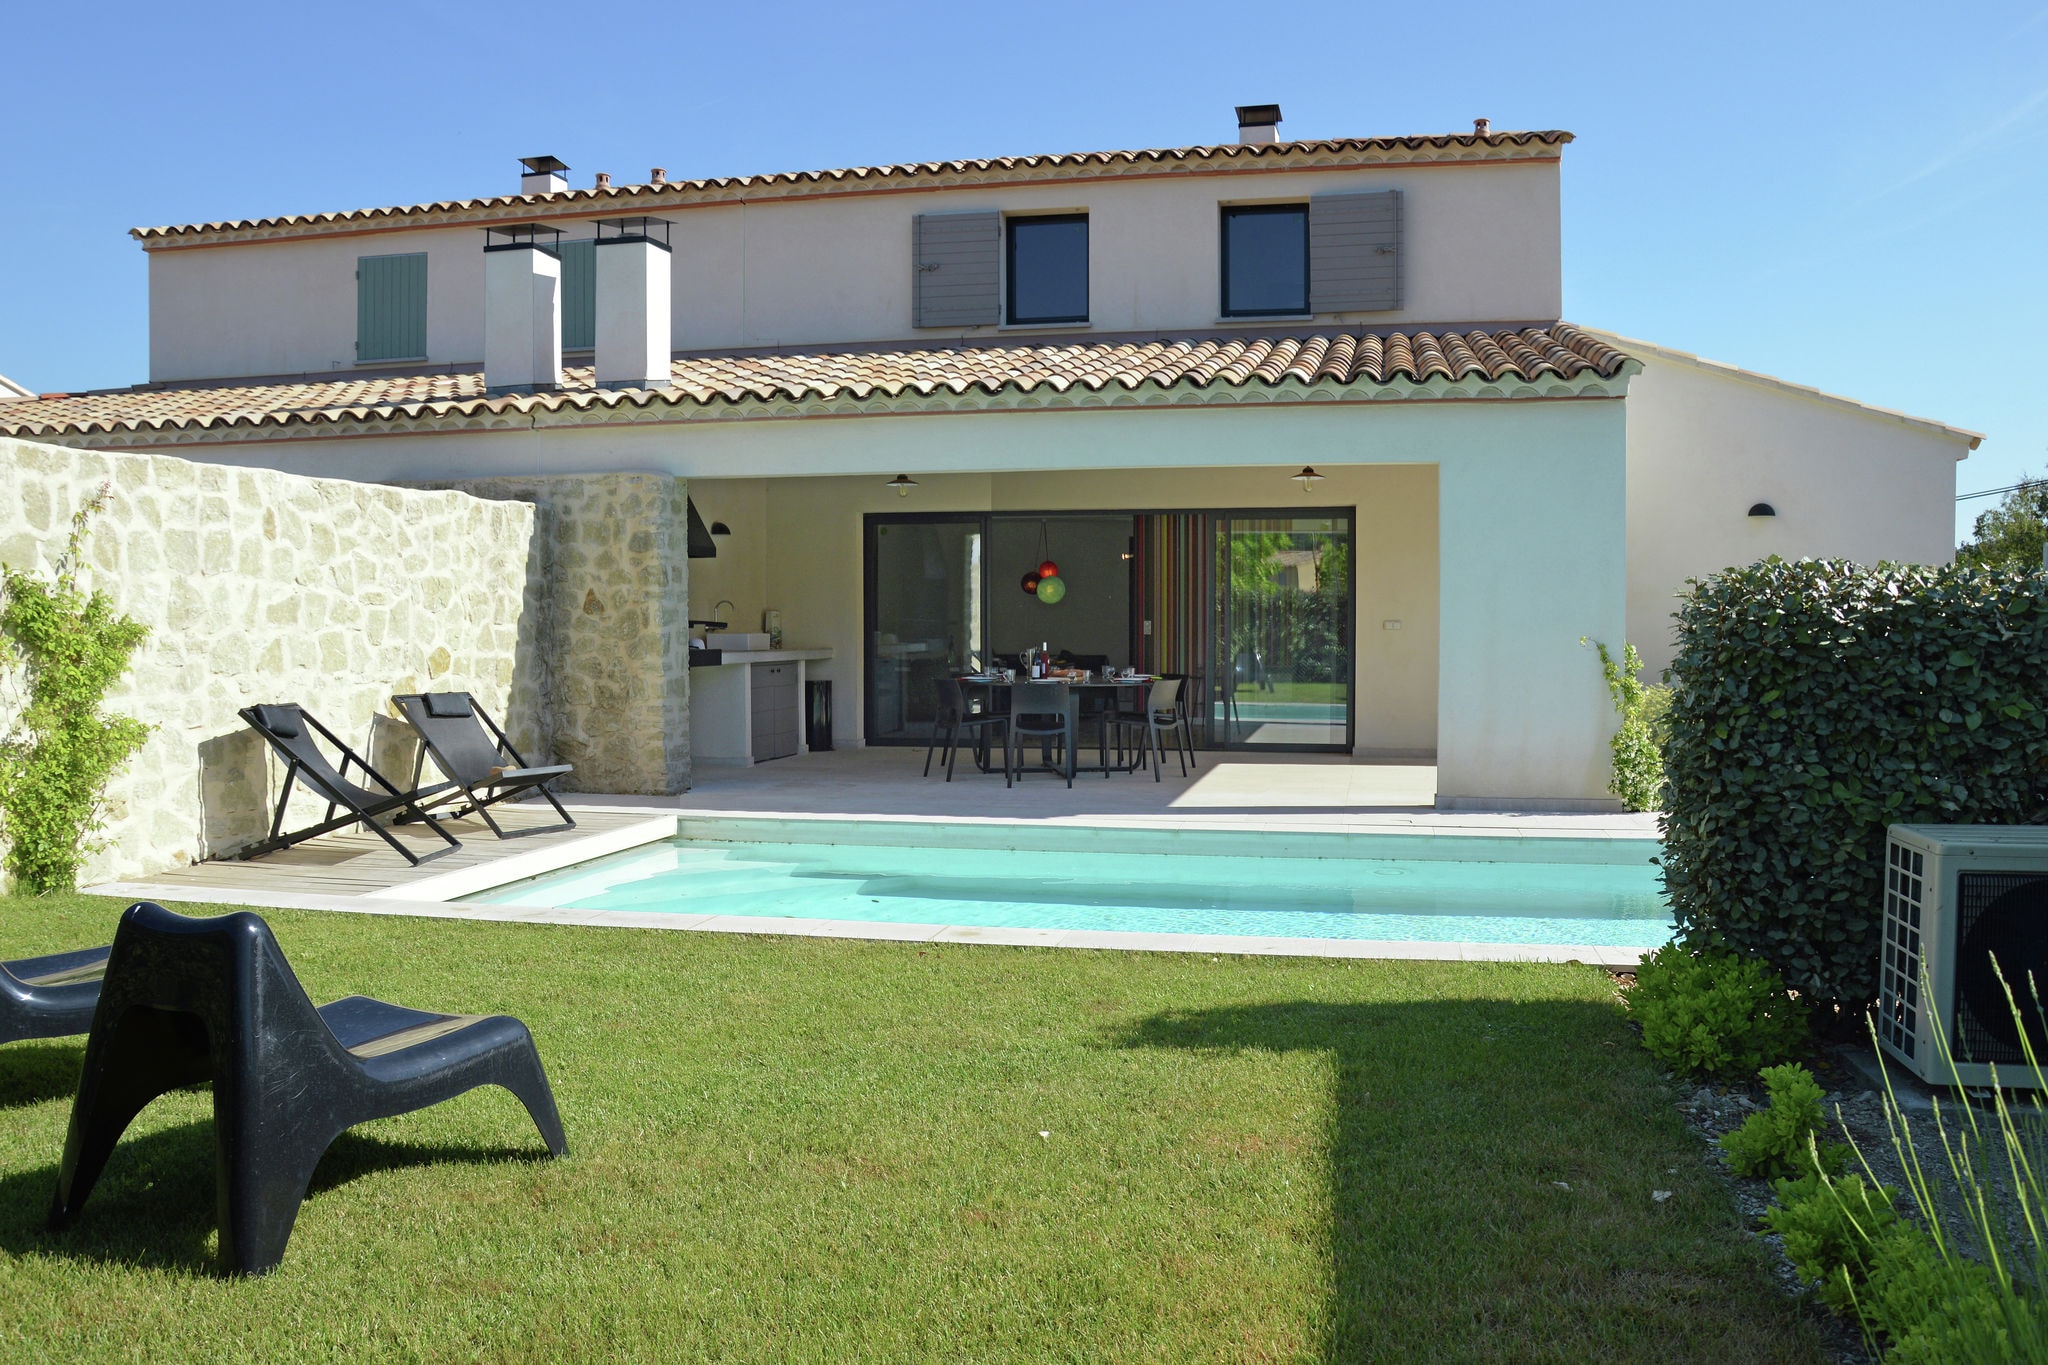 Modern Villa in Malaucène France With Private Swimming Pool